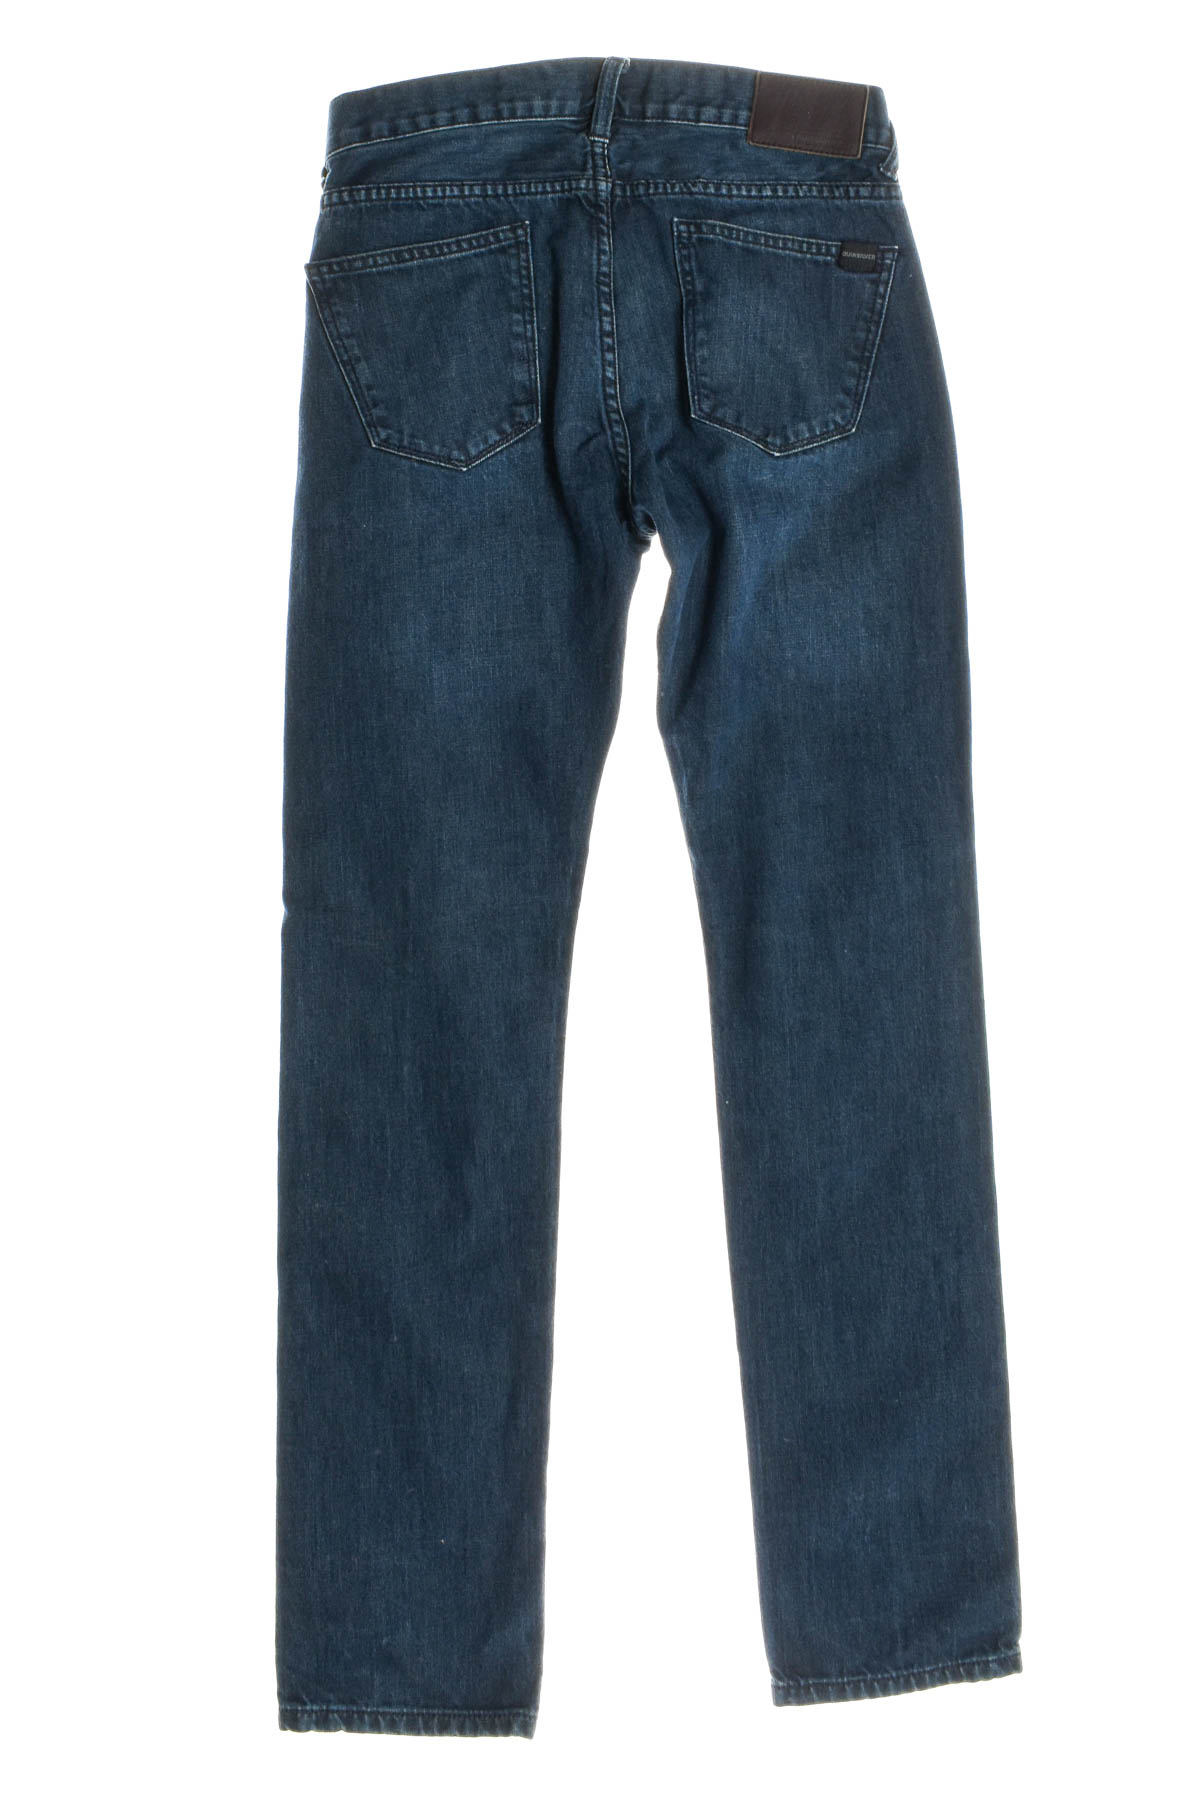 Men's jeans - Quiksilver - 1